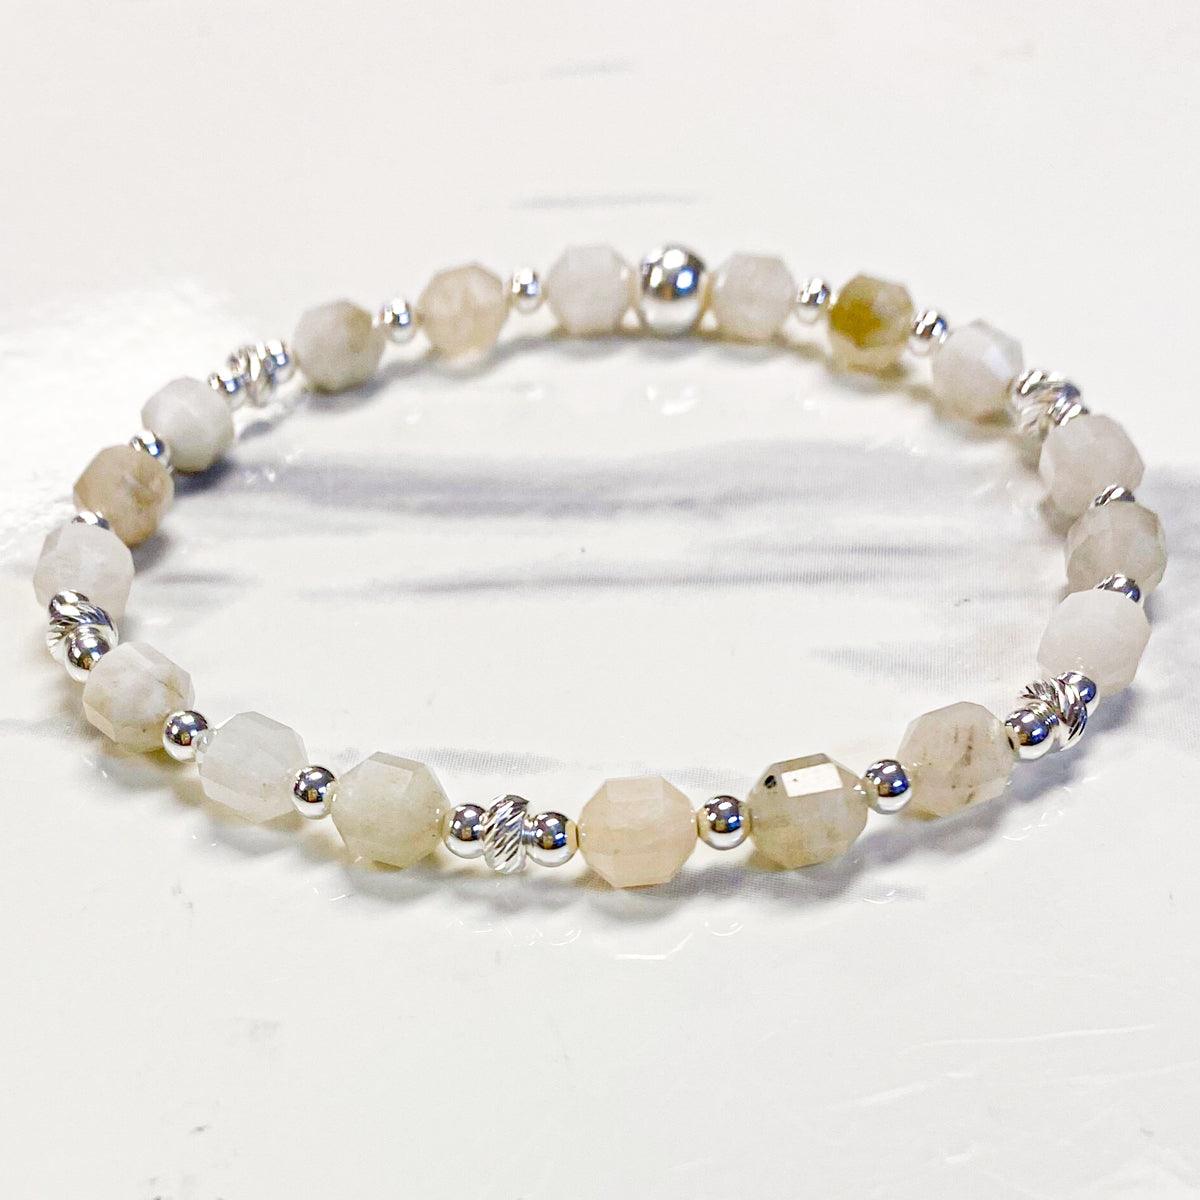 Faceted Hexagon Gemstone Stack Bracelet Kit - Too Cute Beads